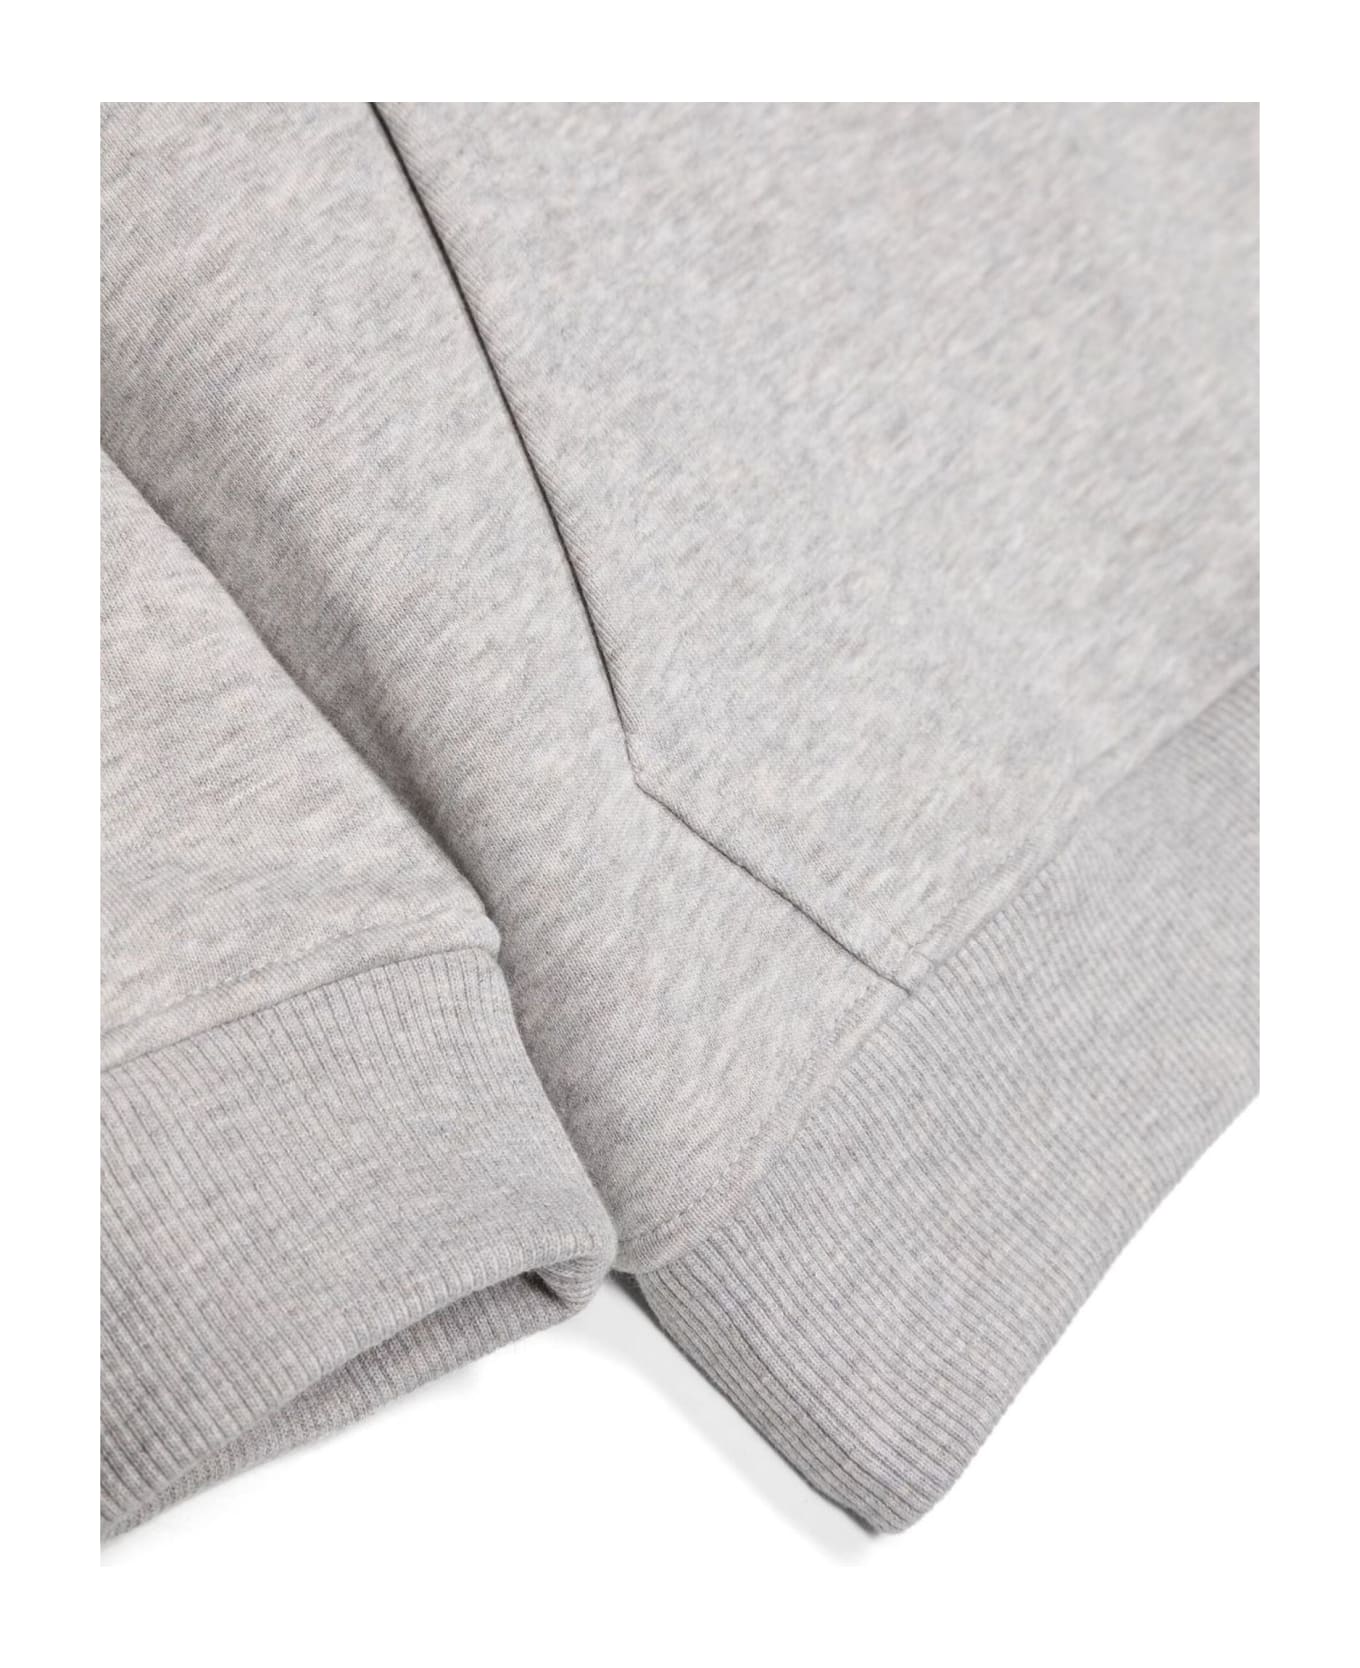 Givenchy Kids Sweaters Grey - Grey ニットウェア＆スウェットシャツ